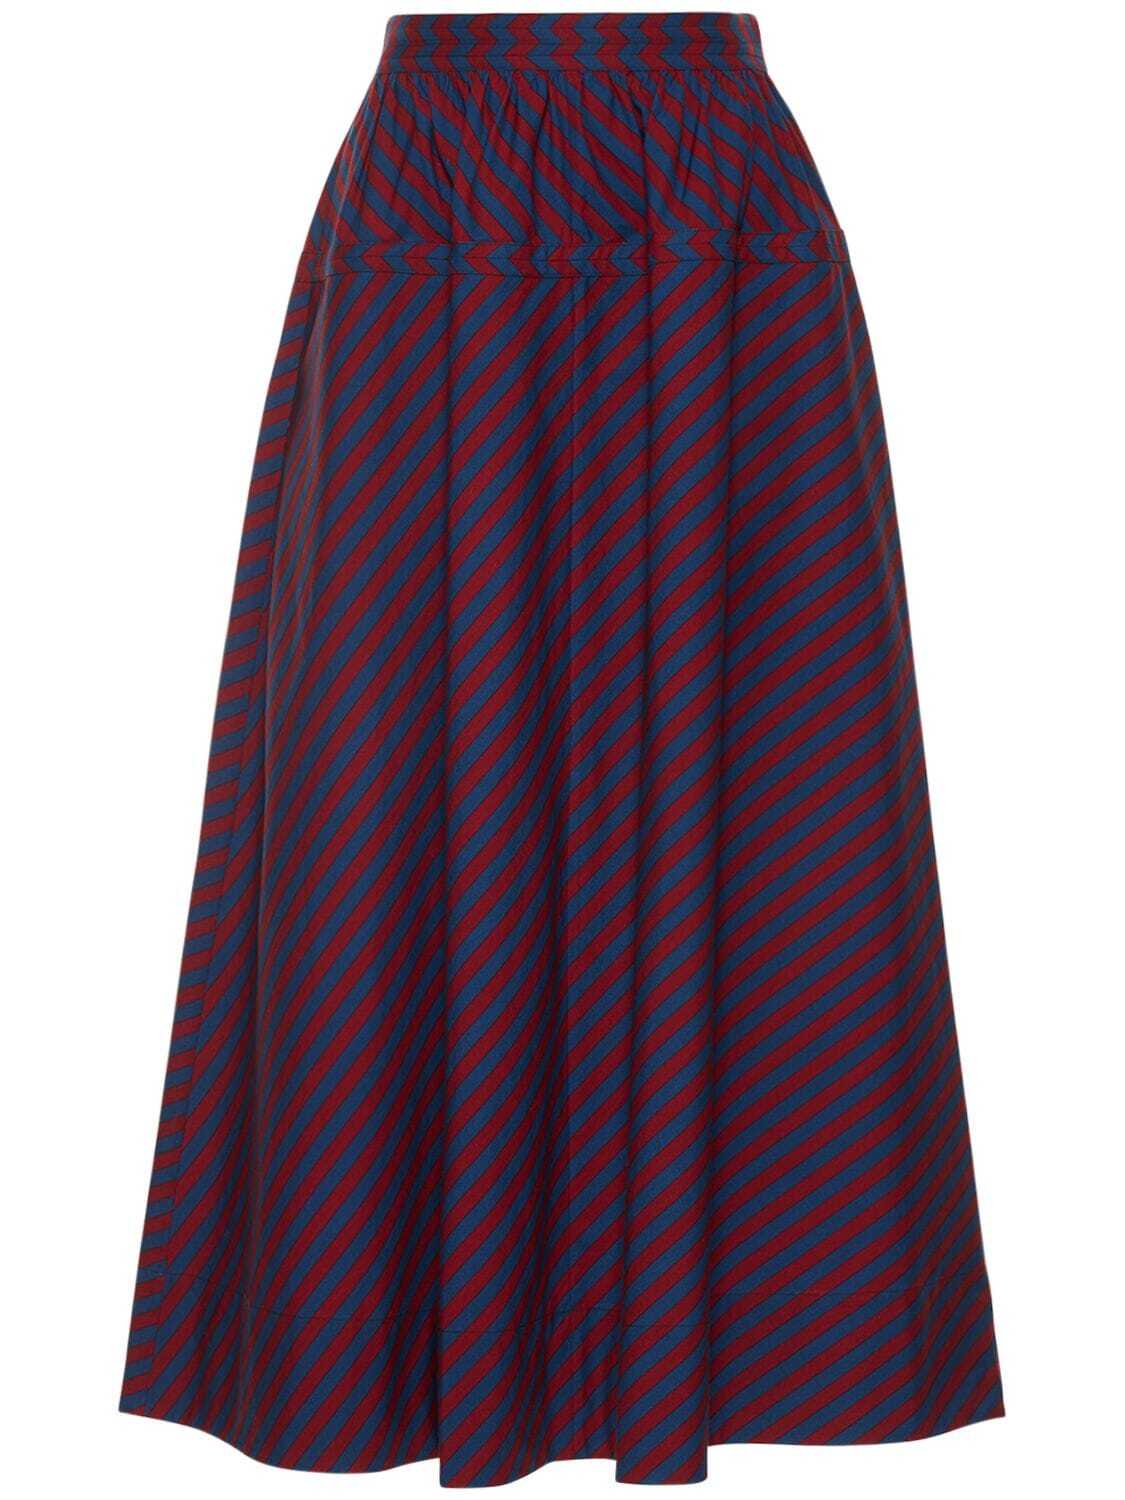 TORY BURCH Striped Cotton Poplin Midi Skirt in blue / multi